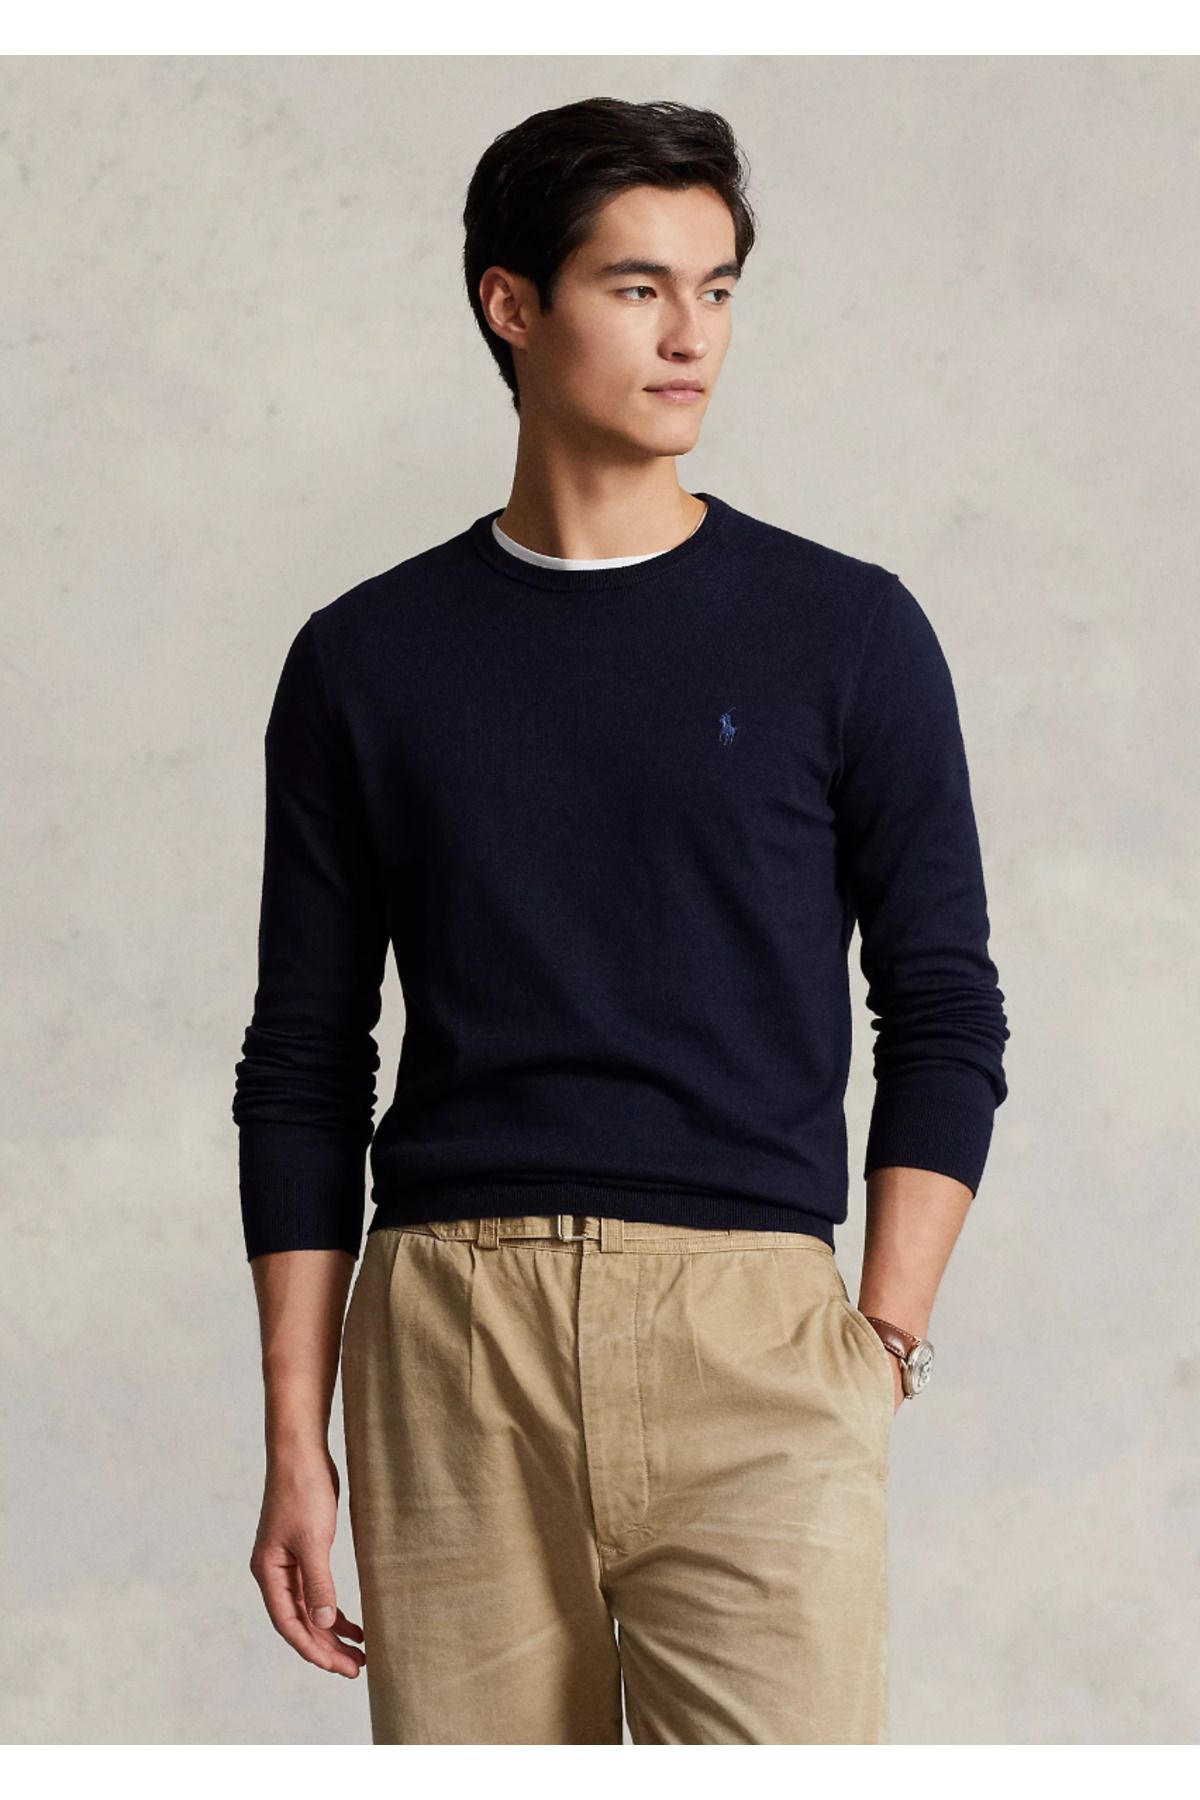 Ralph Lauren Slim Fit Cotton Sweater